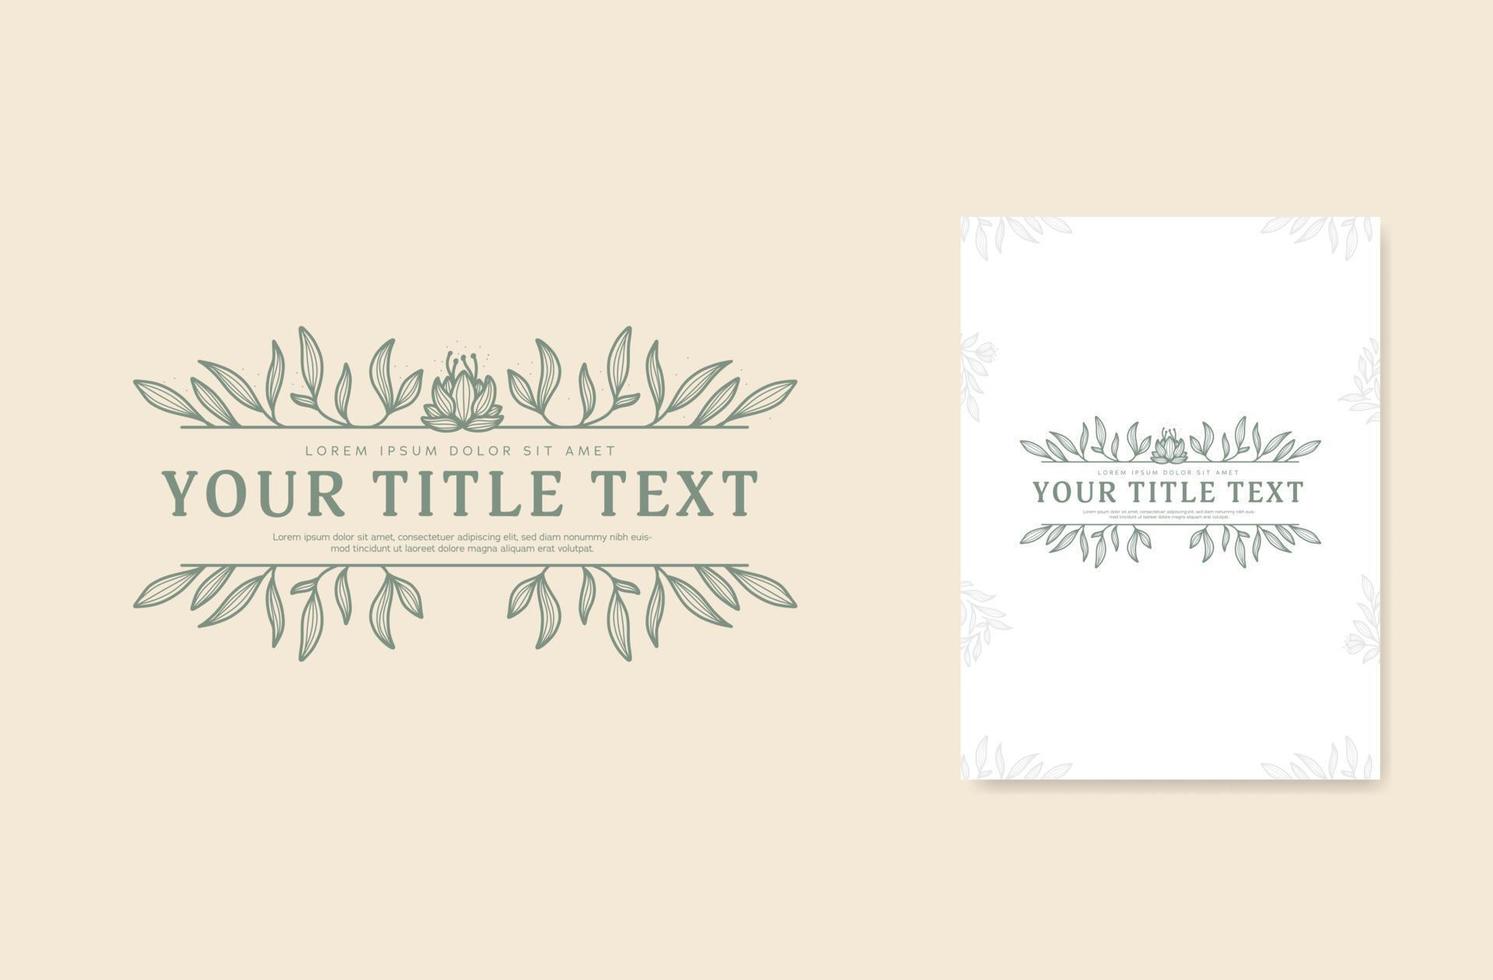 marco divisorio de borde horizontal floral para texto de título con decoración de flores de hoja vector